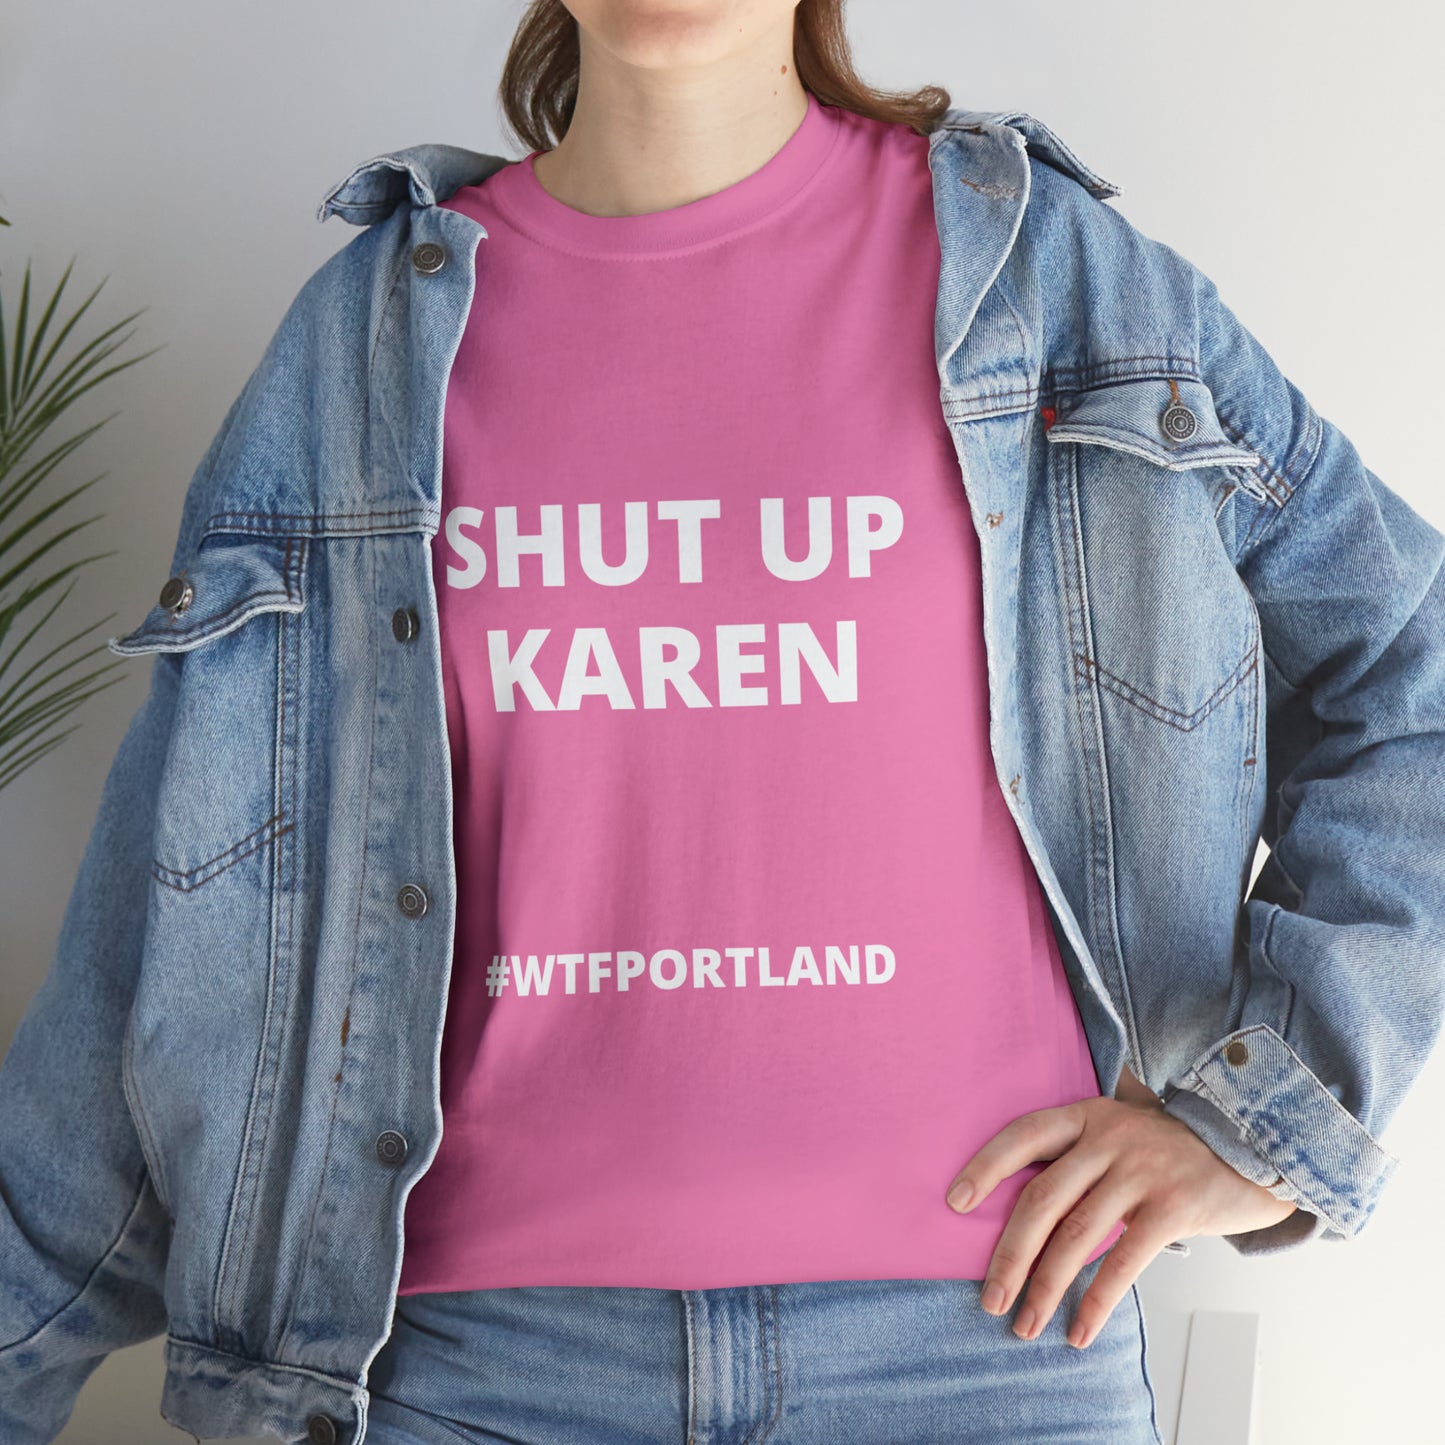 WTF PORTLAND - SHUT UP KAREN